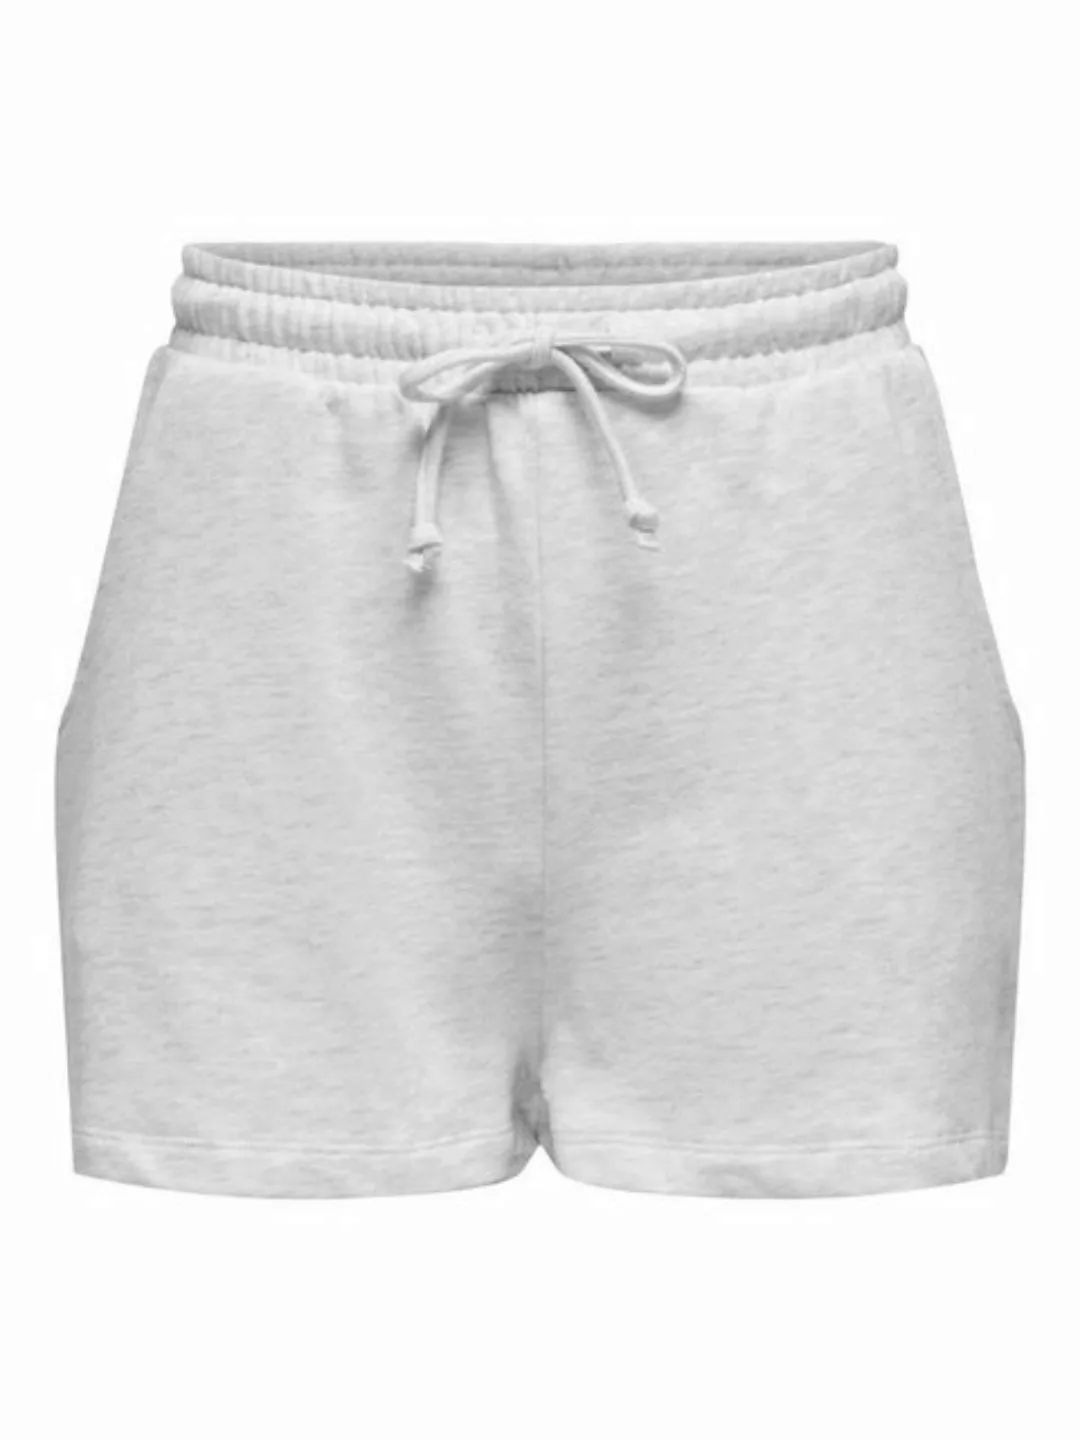 JACQUELINE de YONG Shorts Shorts Locker Geschnitten Bequem 7762 in Braun-4 günstig online kaufen